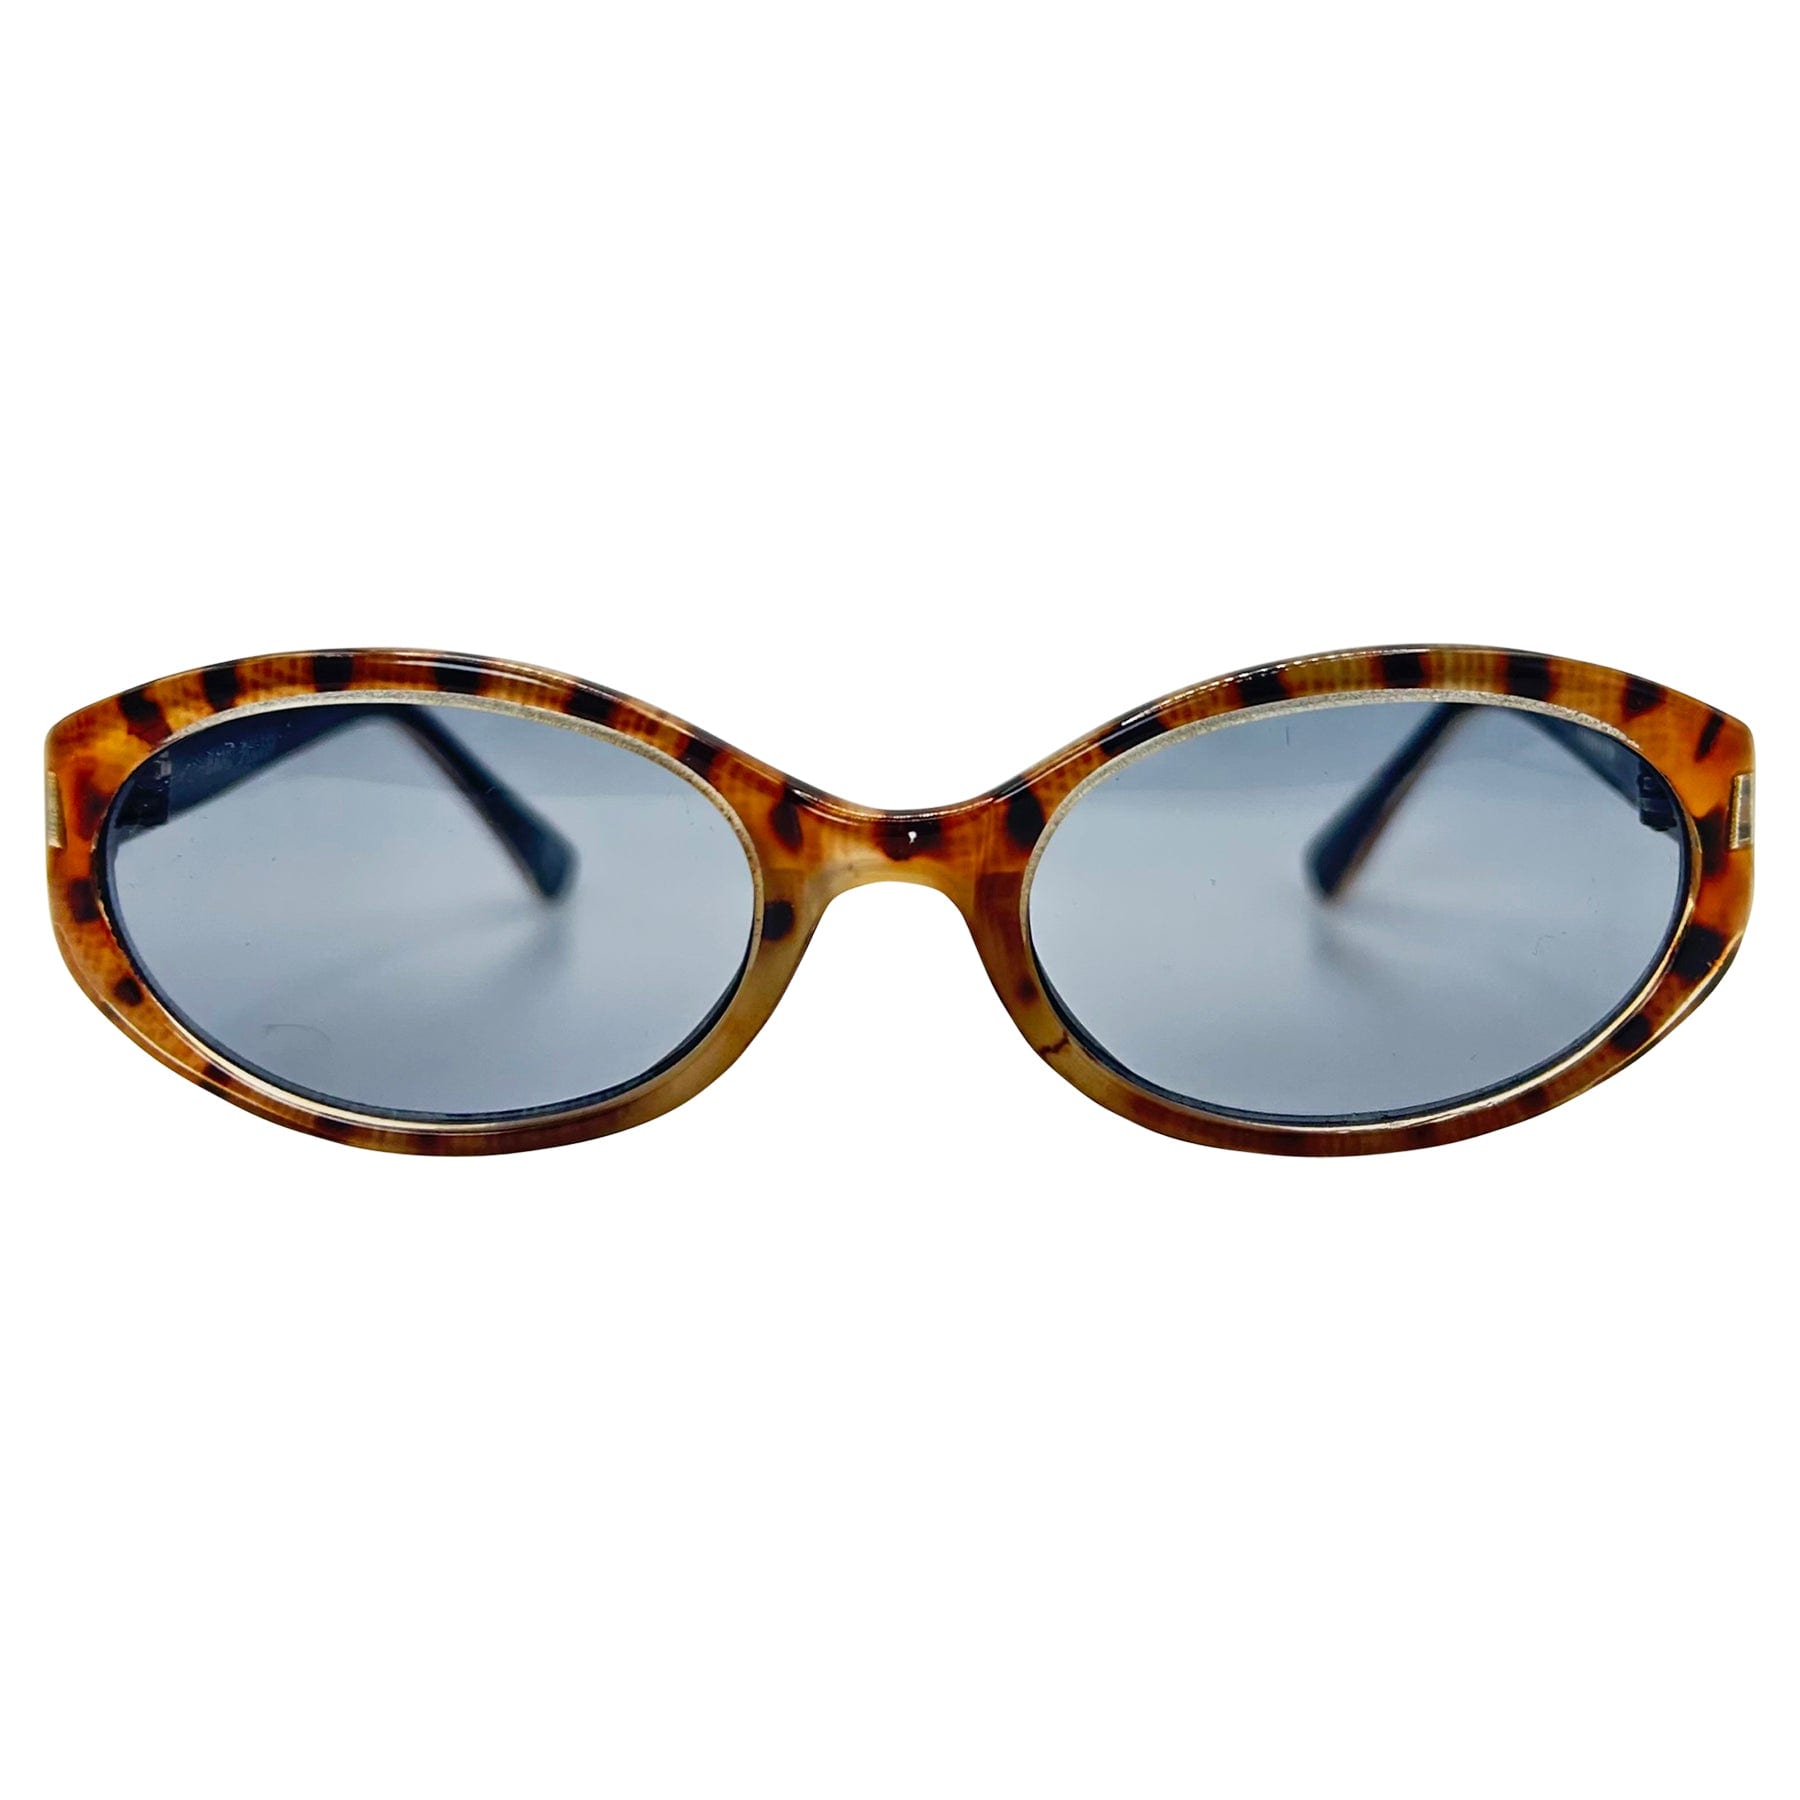 90s vintage sunglasses with unique tiger animal print frames